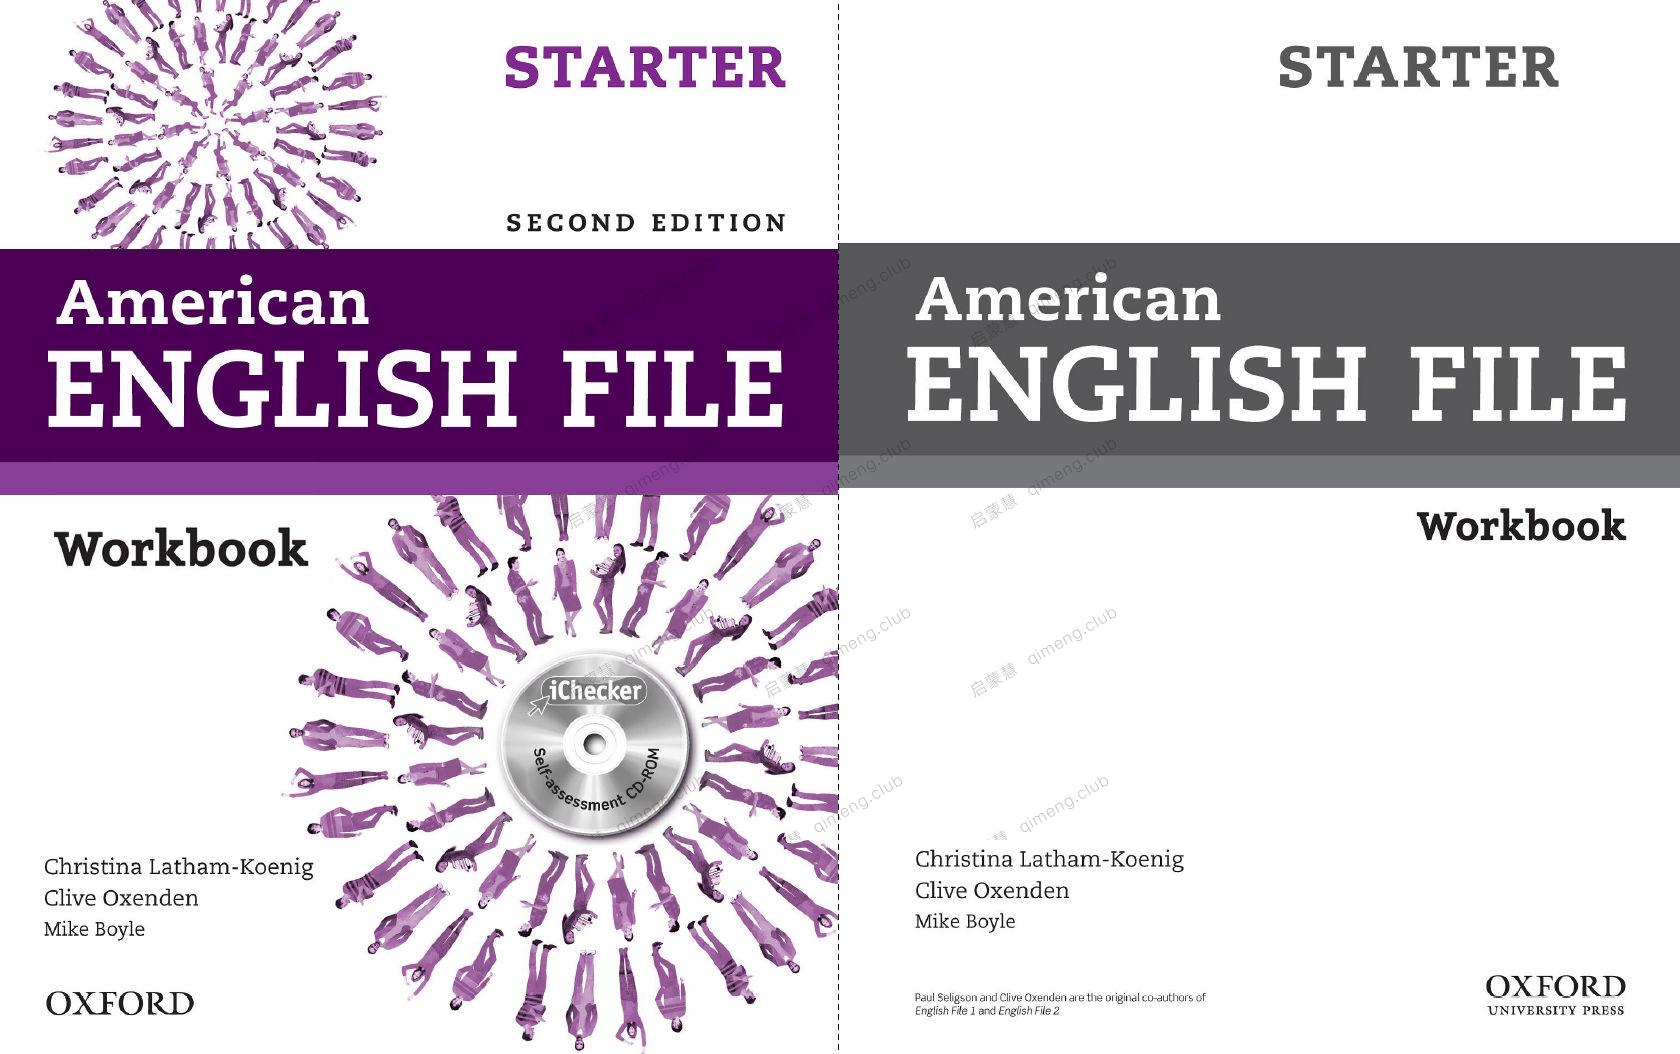 牛津儿童英语教材《American English File Second Edition》Starter - L5 全套 学生书+练习册+教师书+音频+视频+闪卡+语法